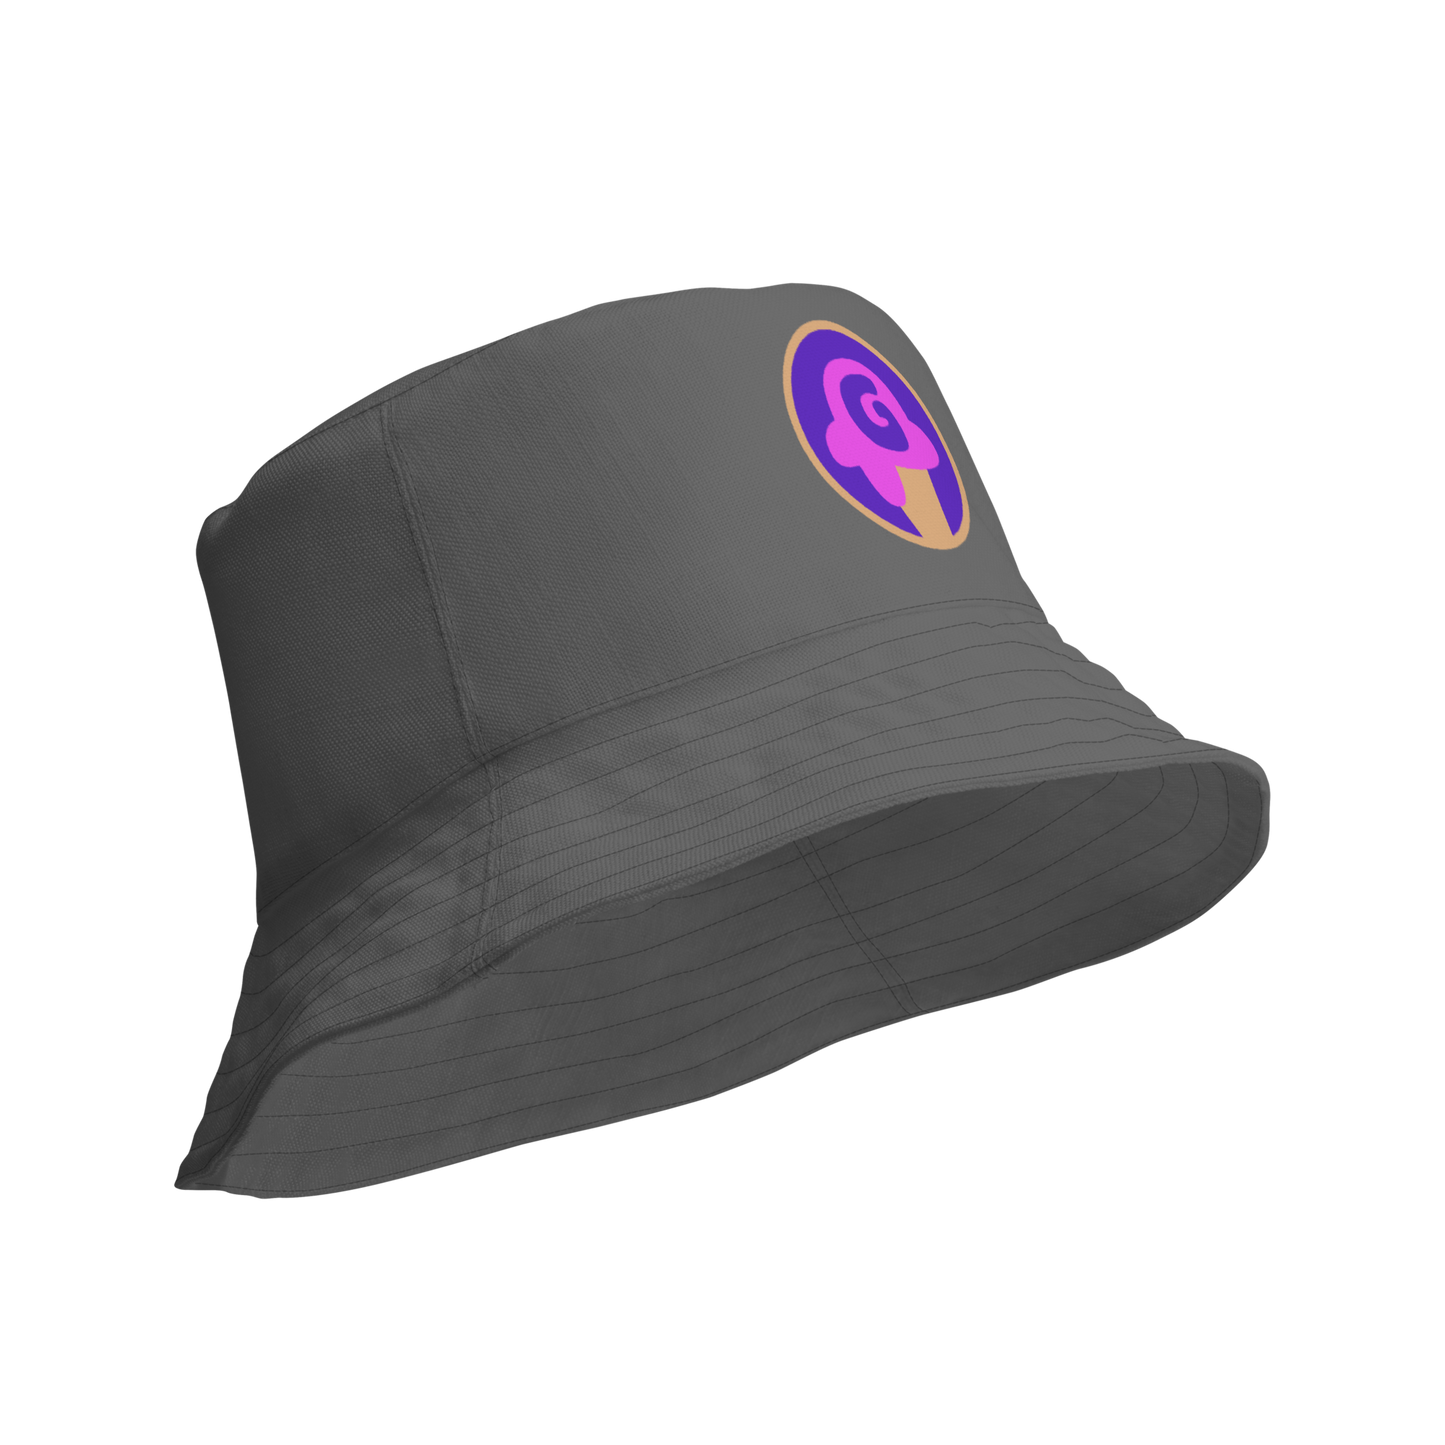 Gelotto logo / Series 2 Reversible bucket hat (OG logo)